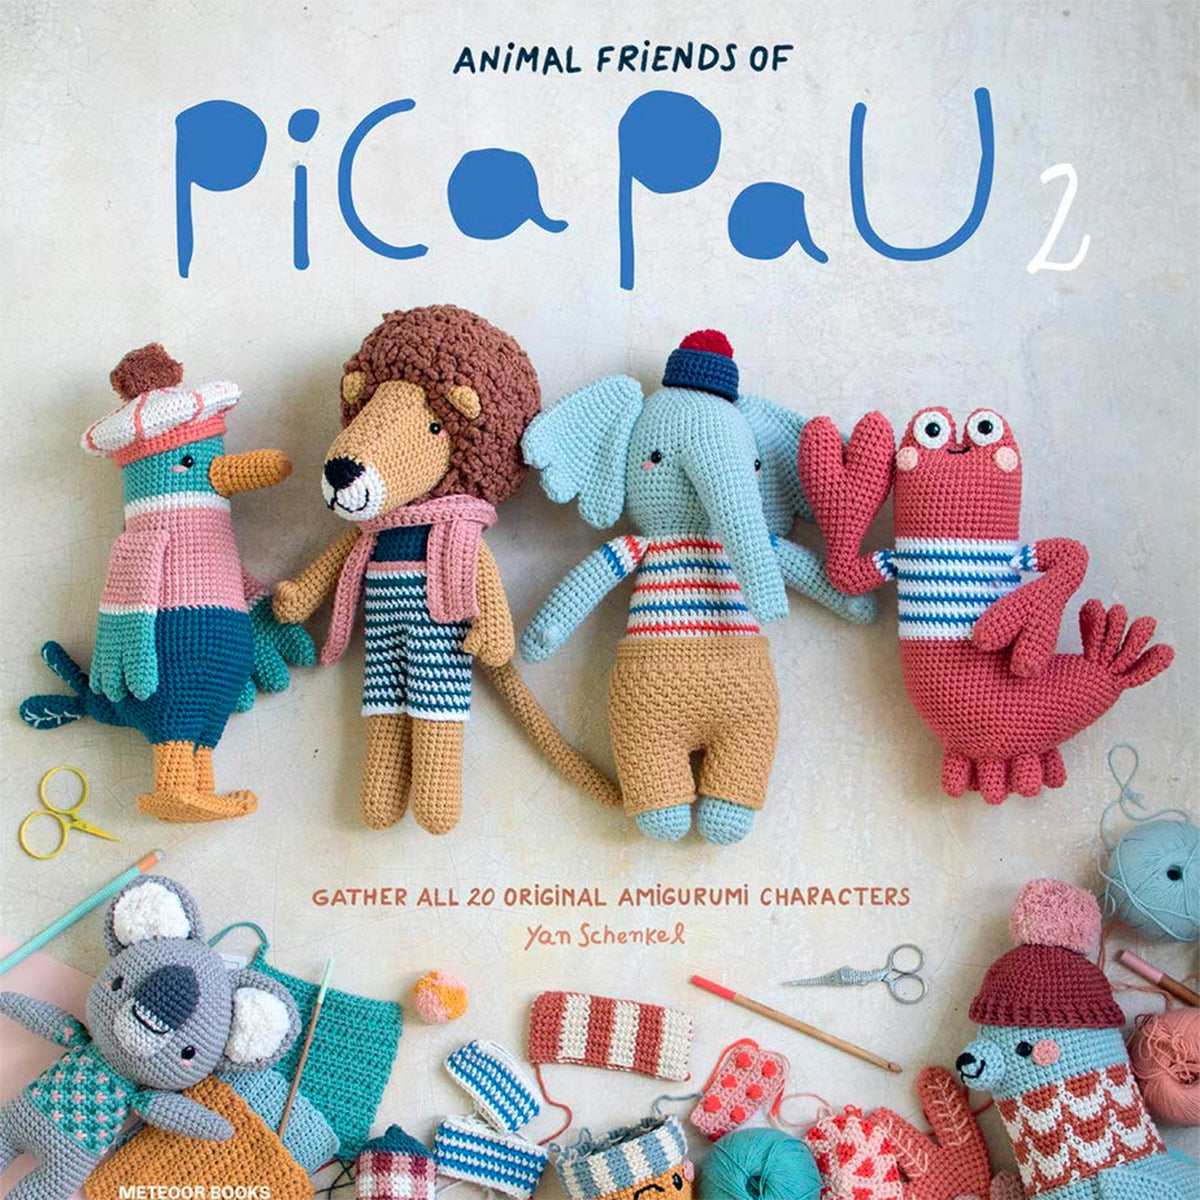 Animal Friends of Pica Pau 2